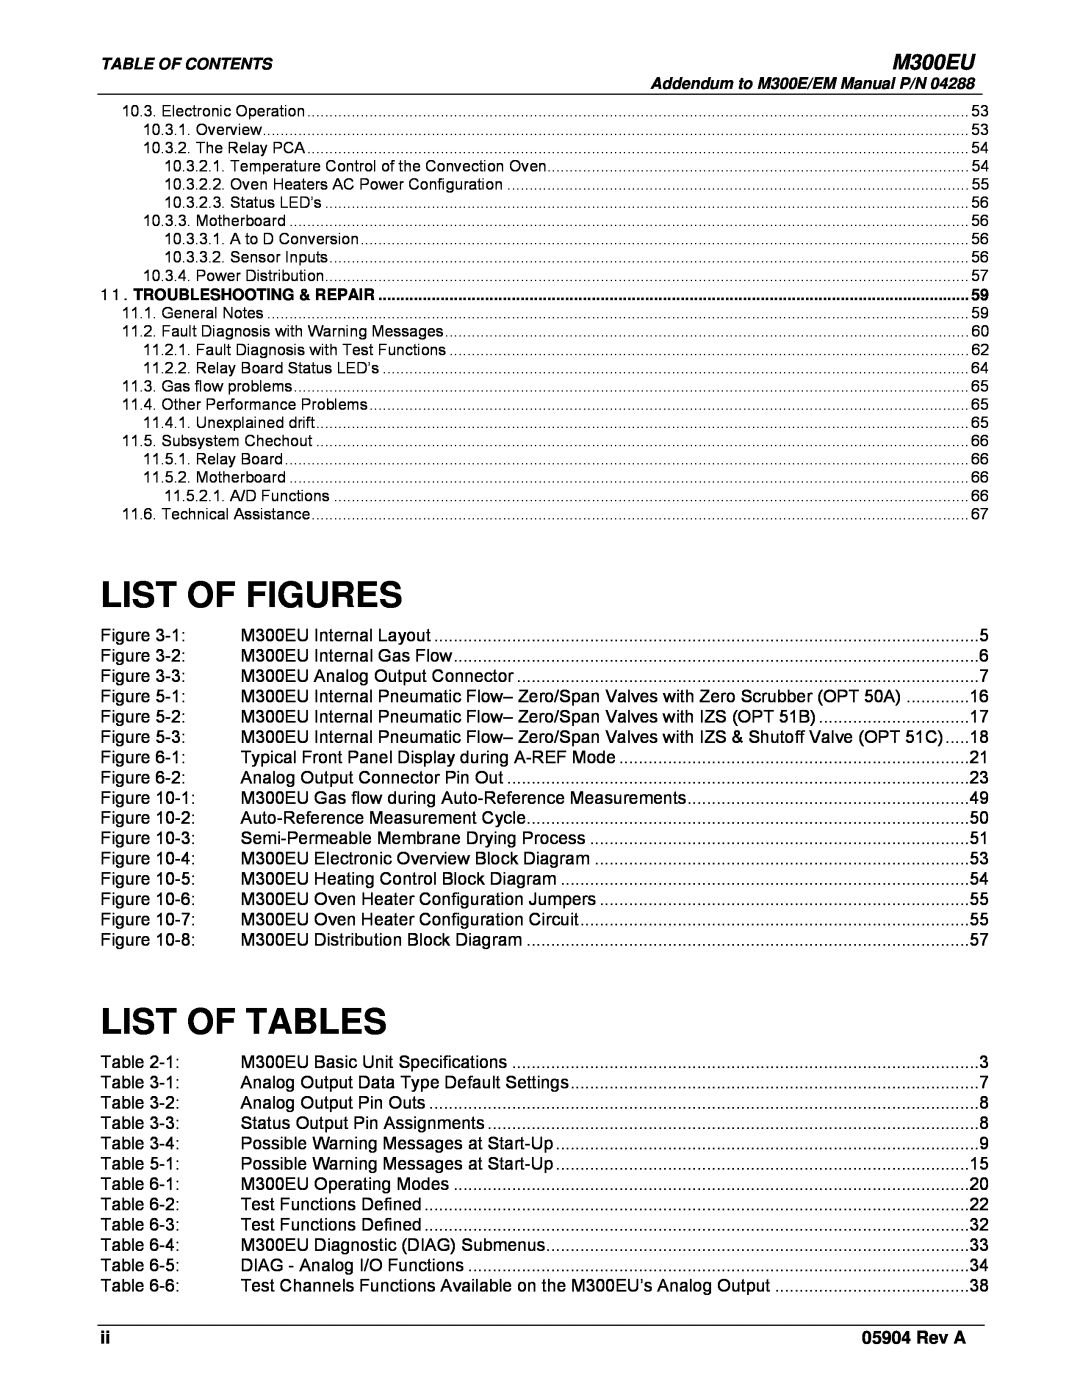 Teledyne Model 300EU manual List Of Figures, List Of Tables, M300EU, Rev A 